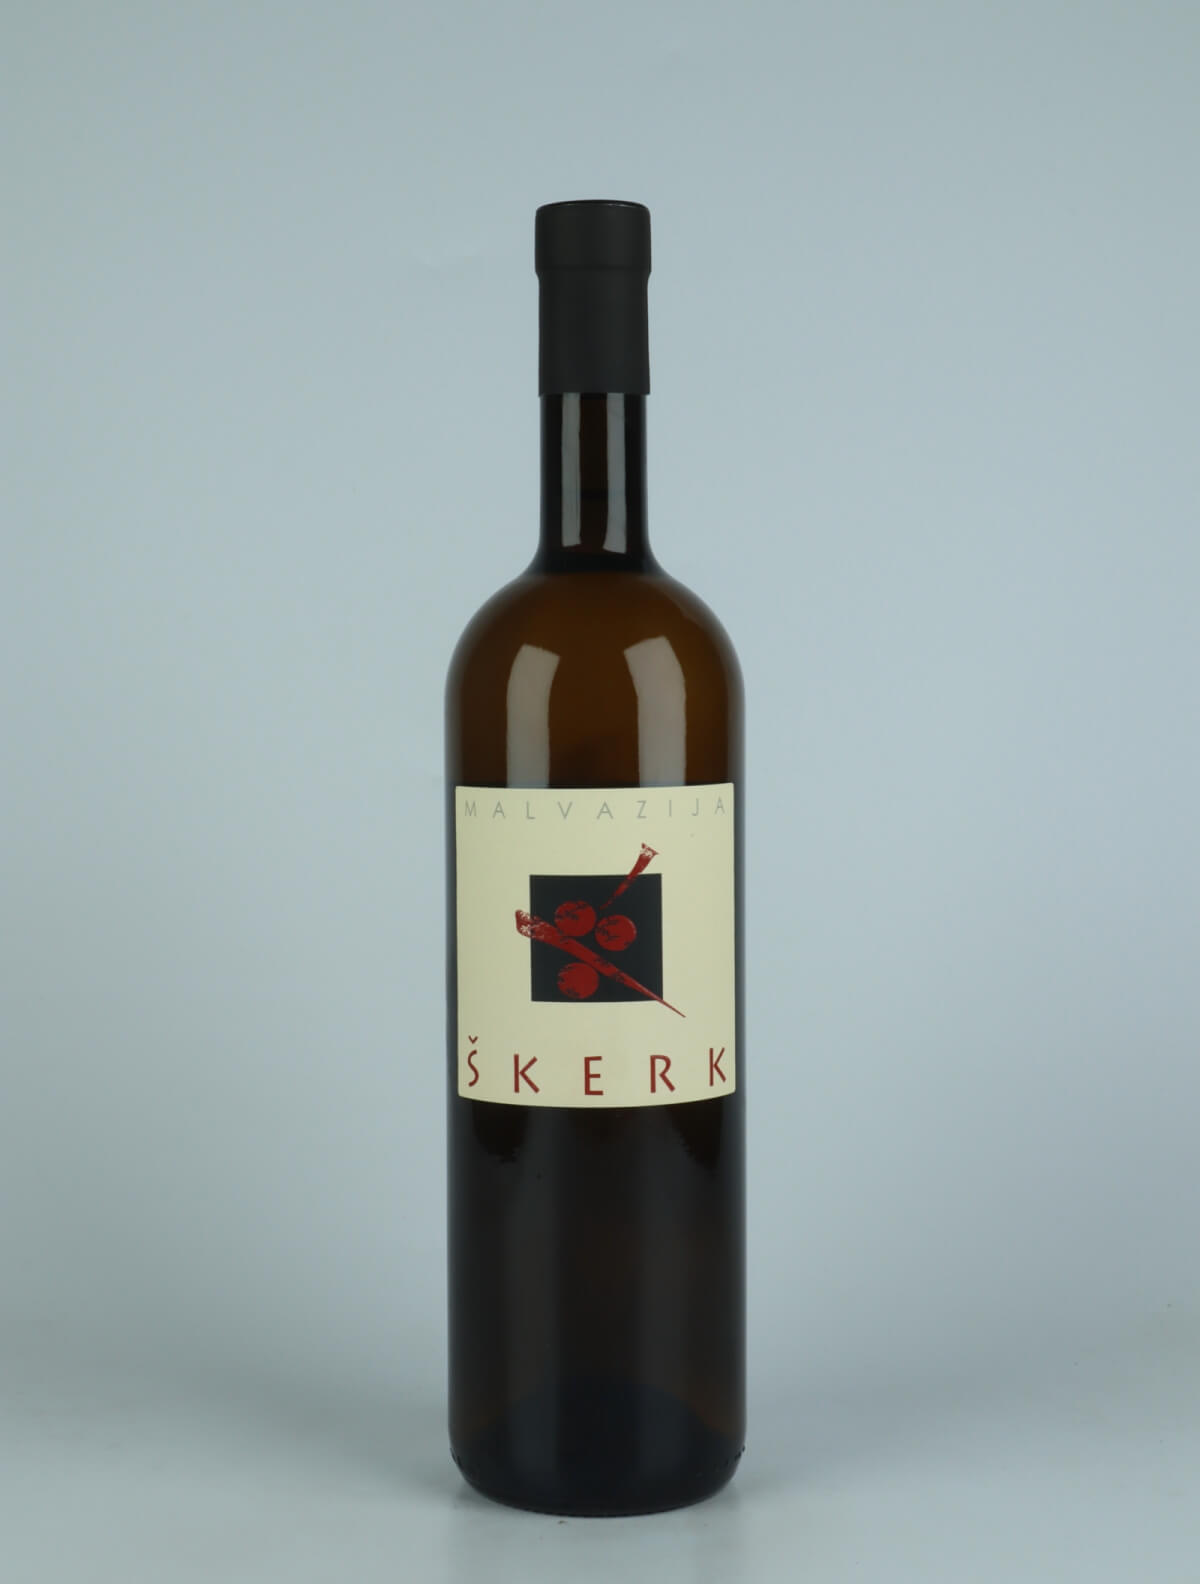 A bottle 2021 Malvazija Orange wine from Skerk, Friuli in Italy